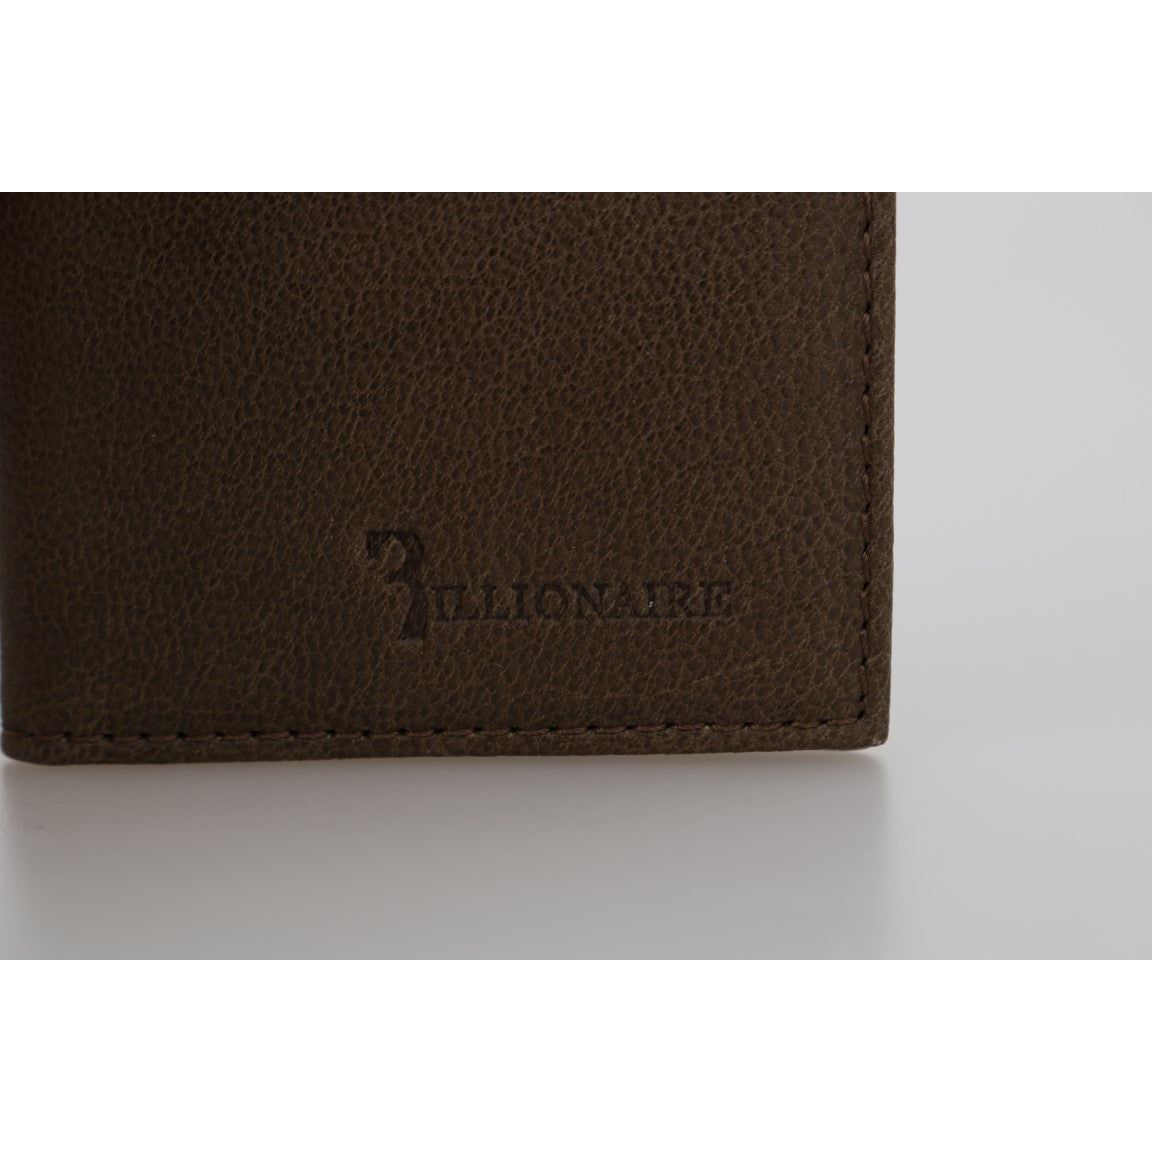 Billionaire Italian Couture Elegant Leather Men's Wallet in Brown brown-leather-bifold-wallet-4 Wallet 463376-brown-leather-bifold-wallet-7-3.jpg